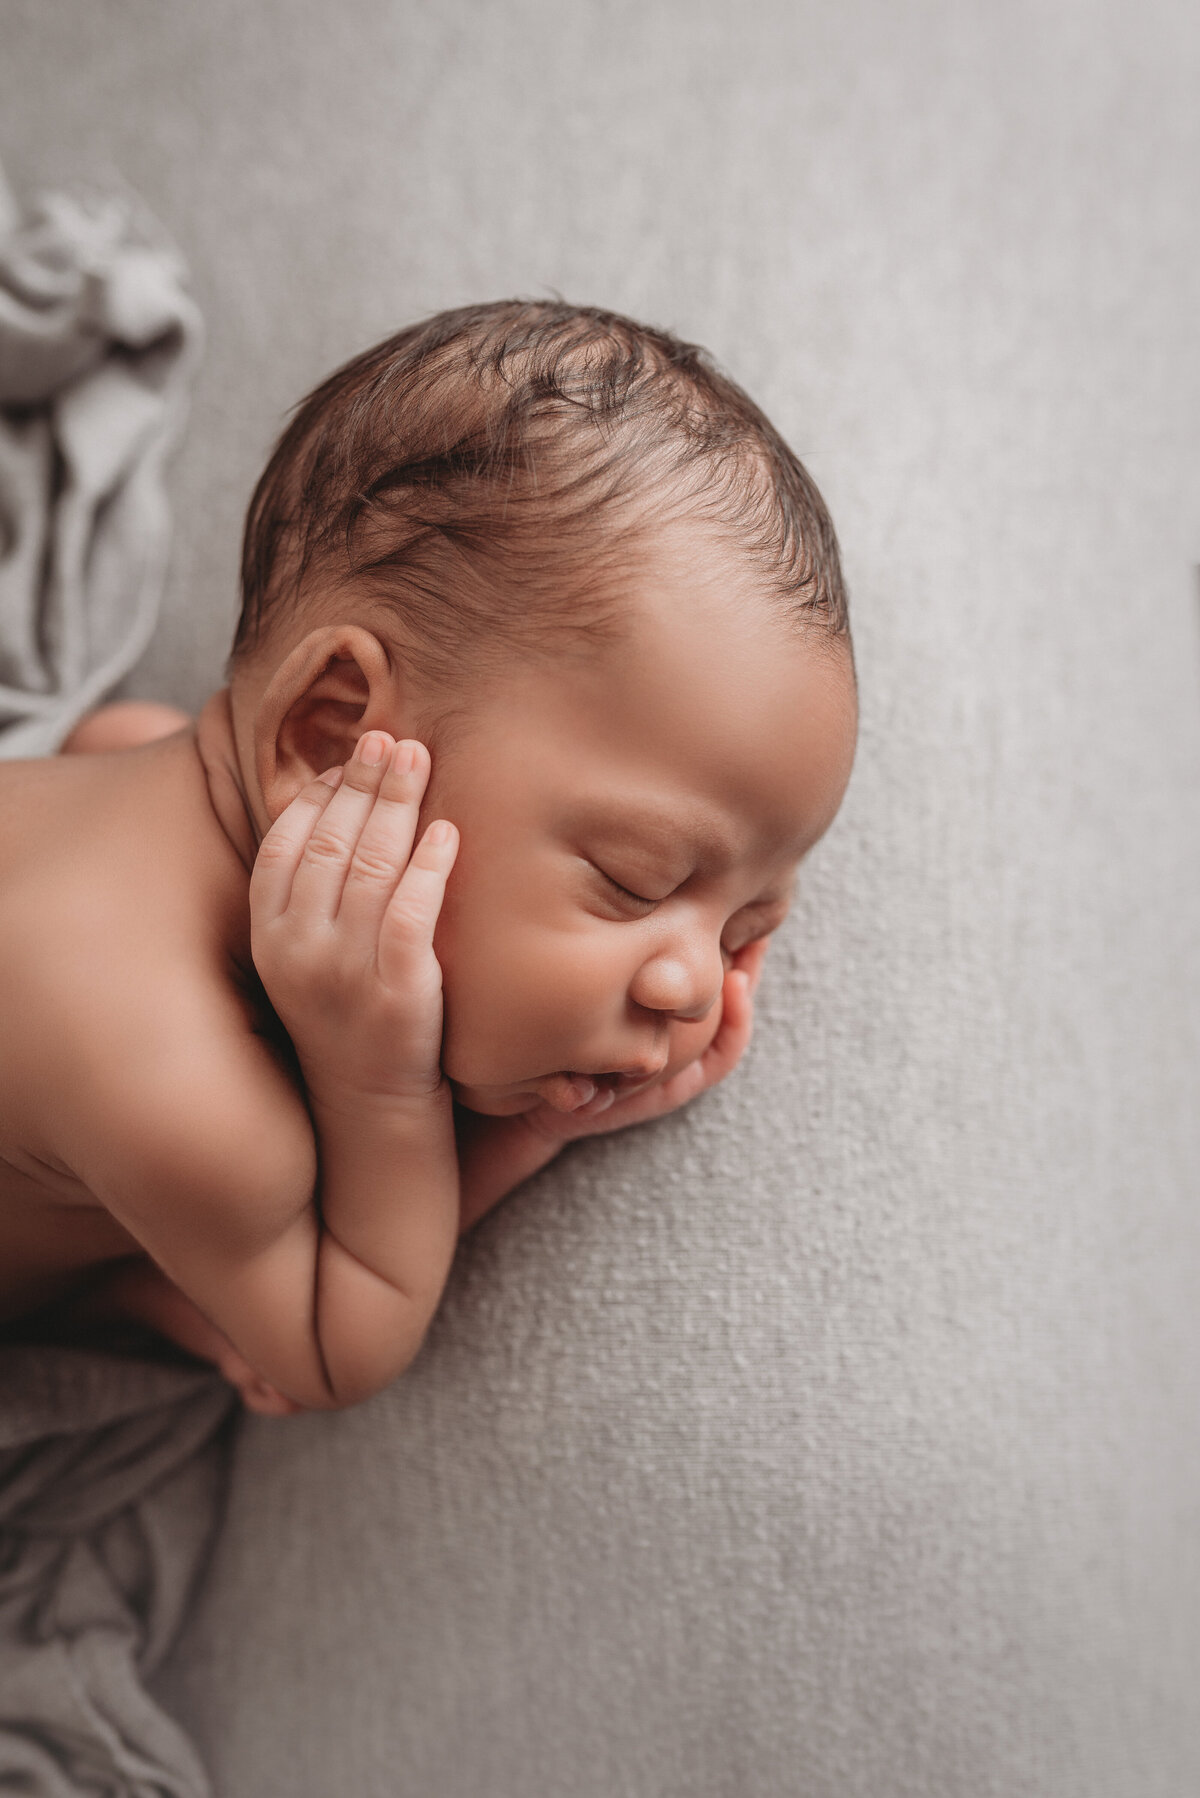 2 week old baby boy asleep on gray fabric backdrop with hands on cheeks